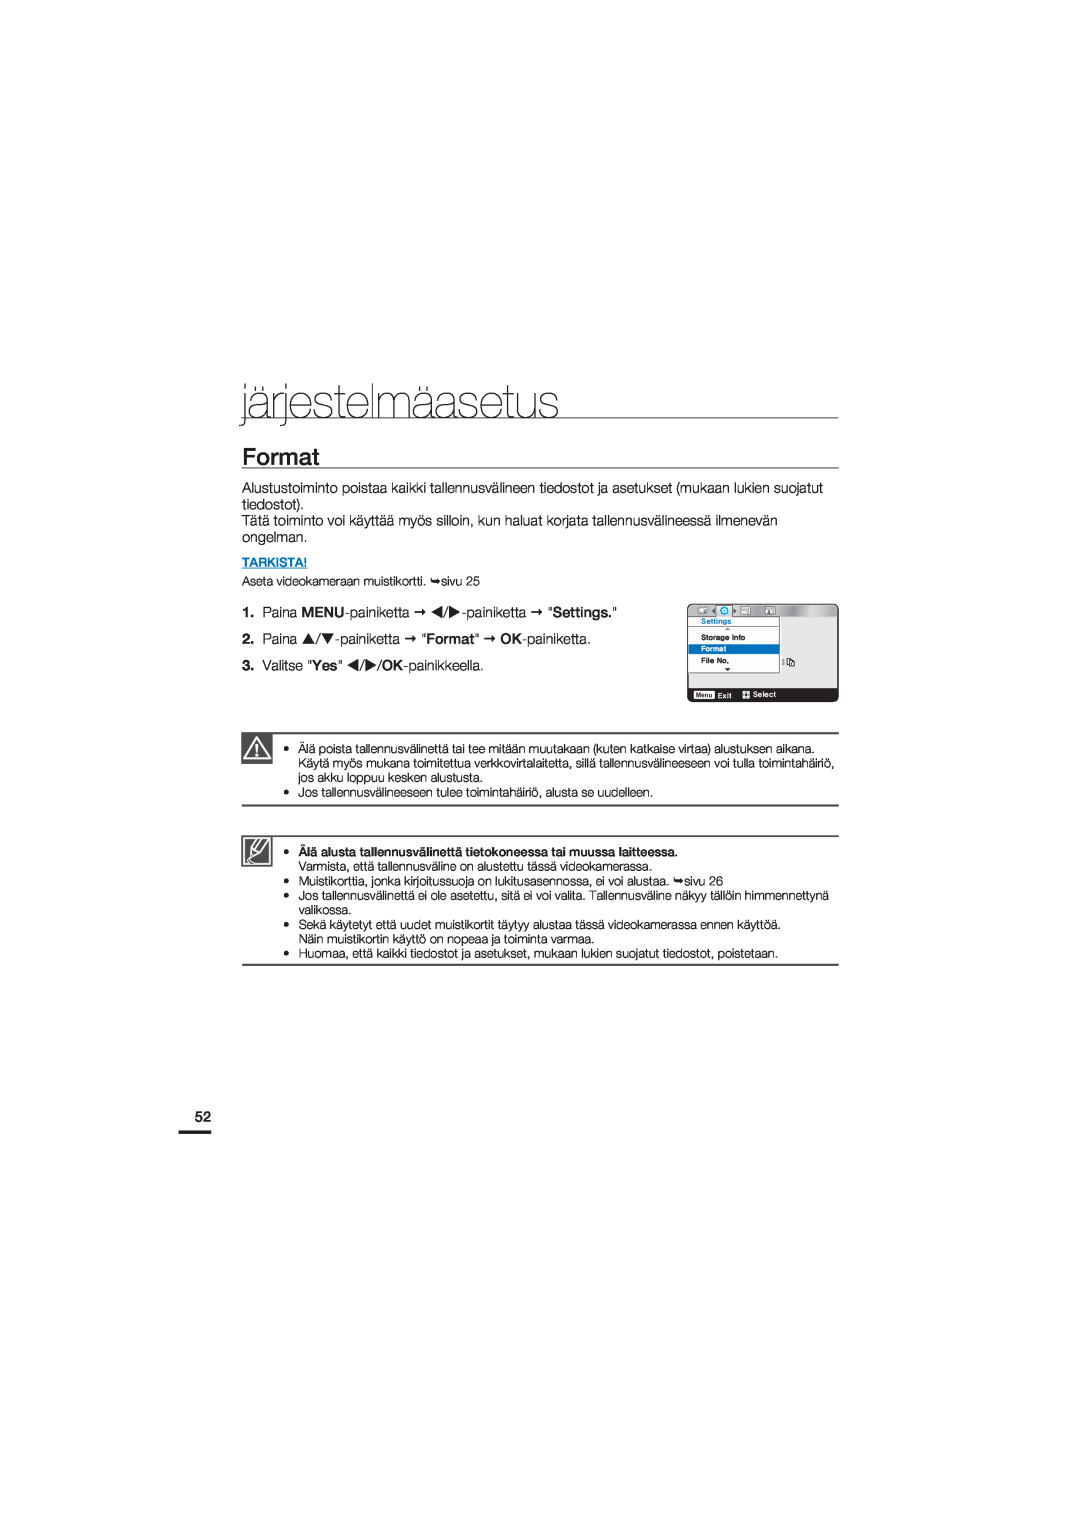 Samsung HMX-U20BP/EDC manual Format, järjestelmäasetus, Tarkista, 4UPSBHF*OGP, Jmf/P 